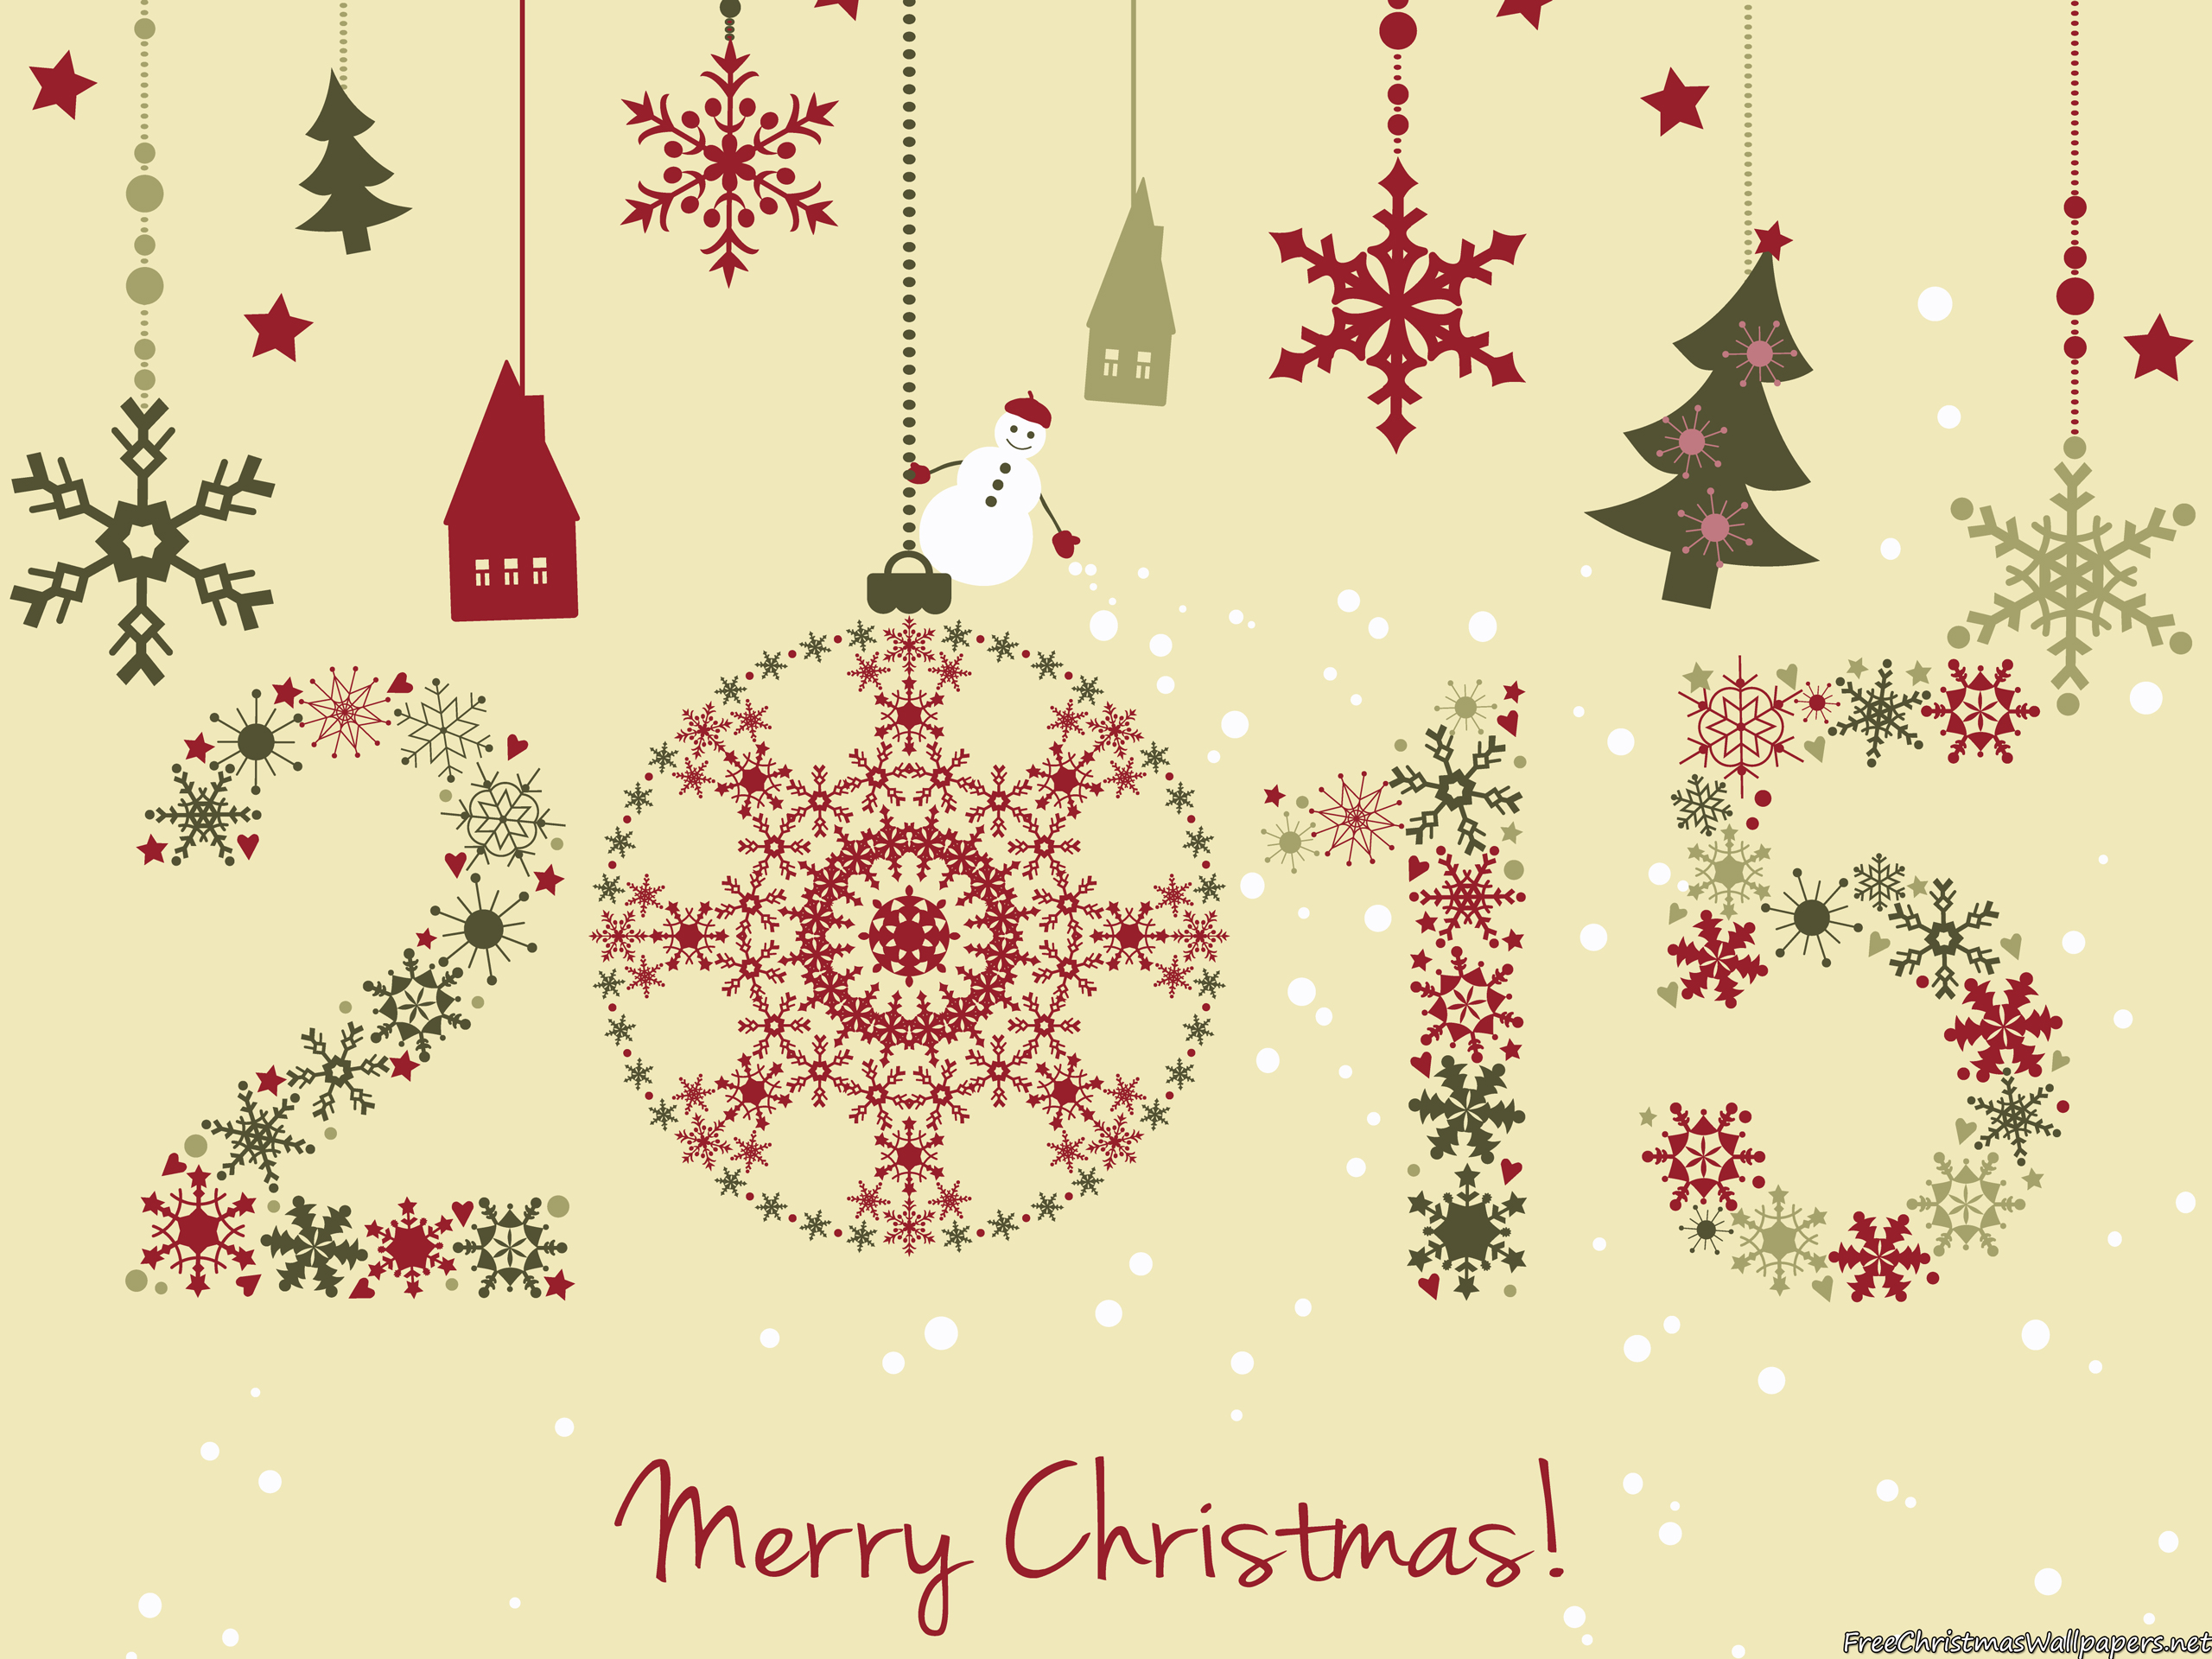 Merry Christmas 2015 Greetings